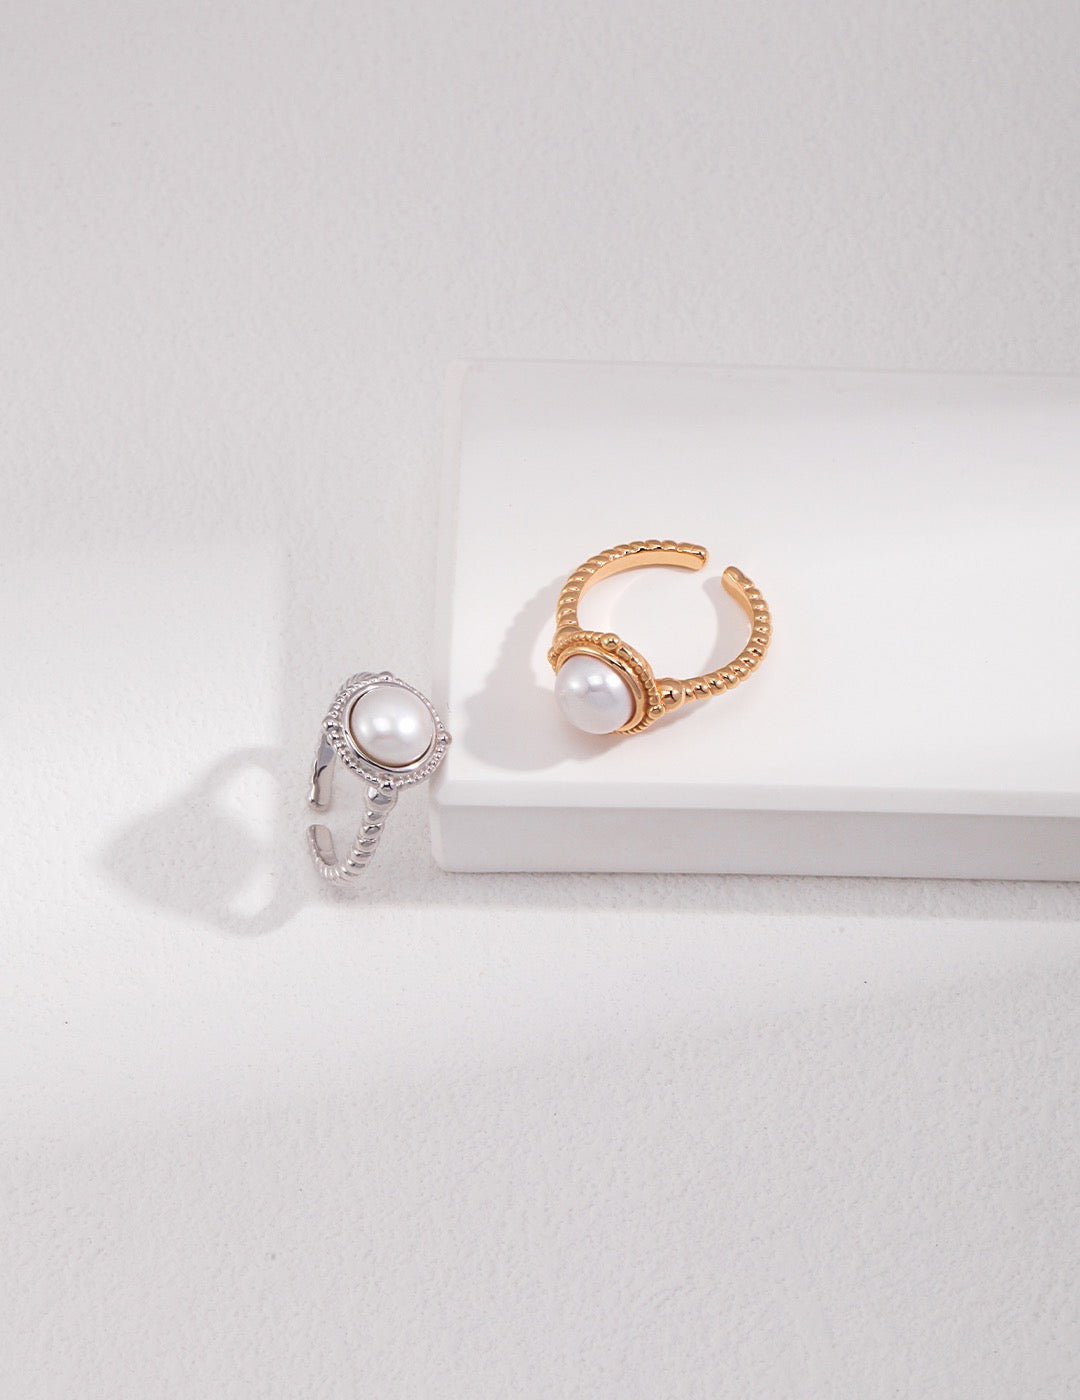 Pearl Ring,Fashion Ring,Unique Ring,Elegant Gemstone Ring